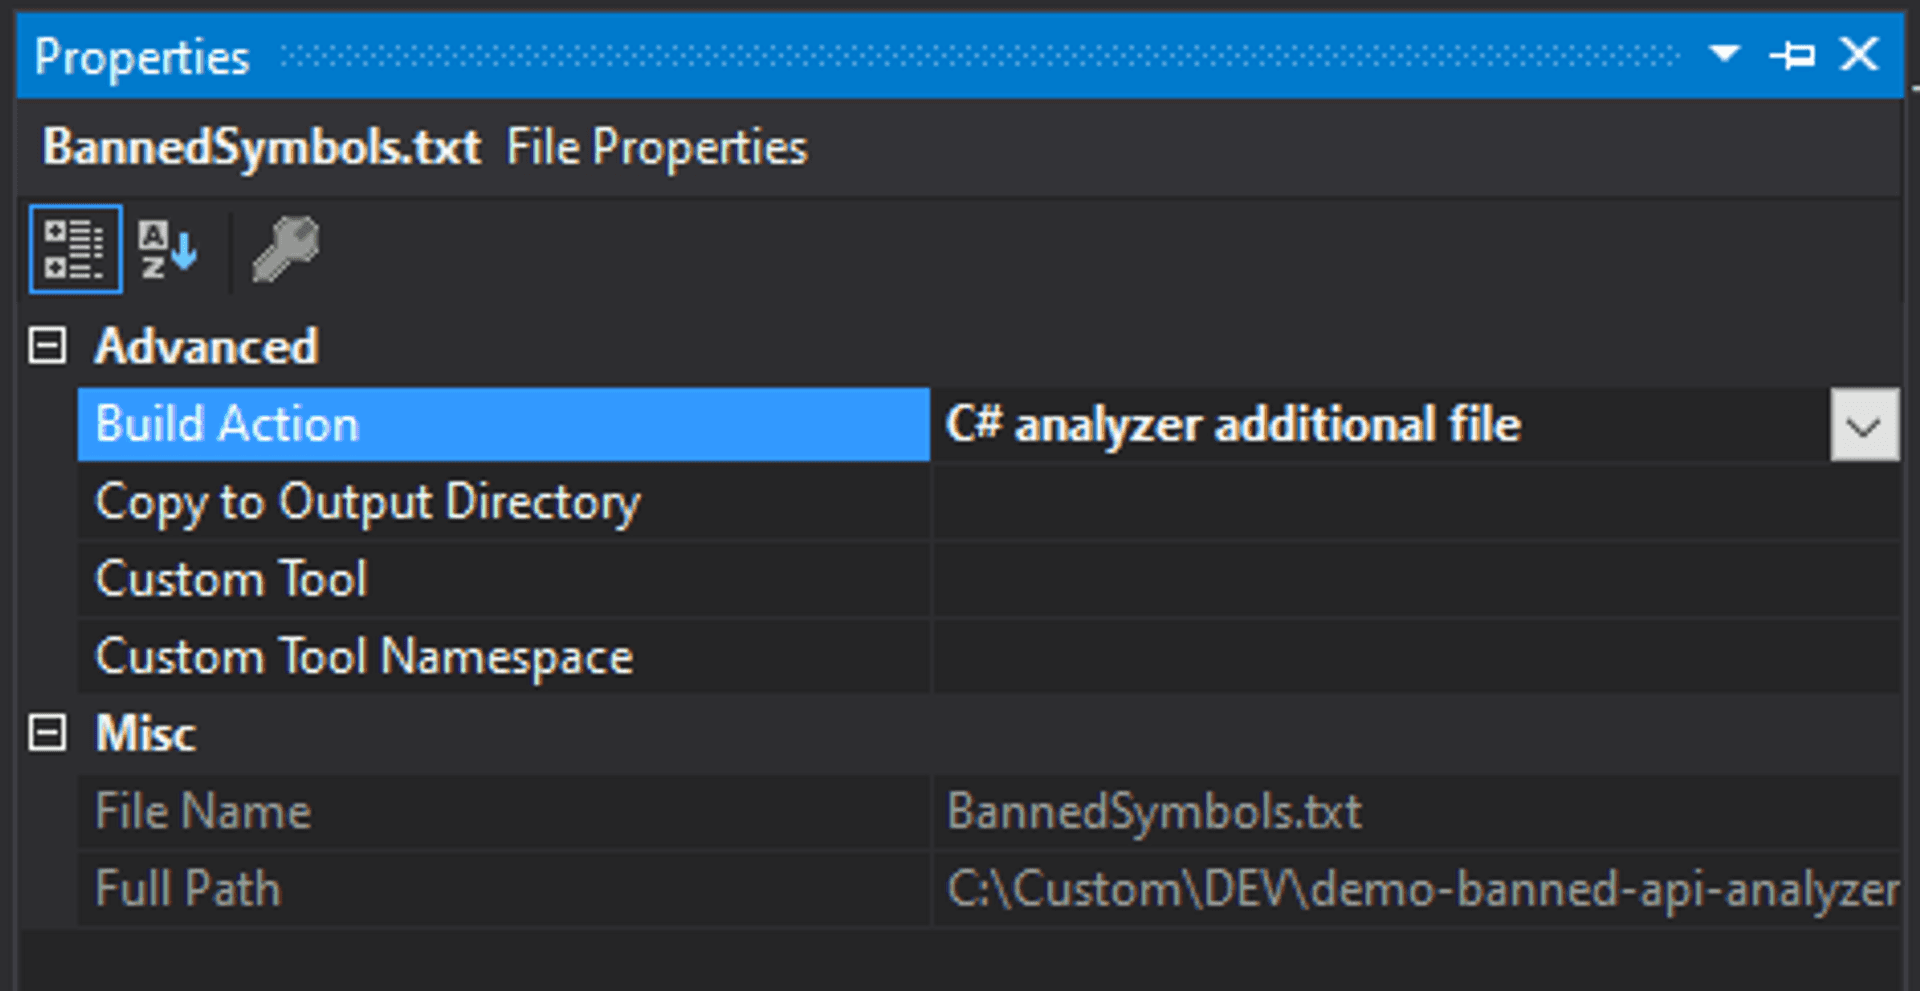 BannedSymbols.txt properties in Visual Studio